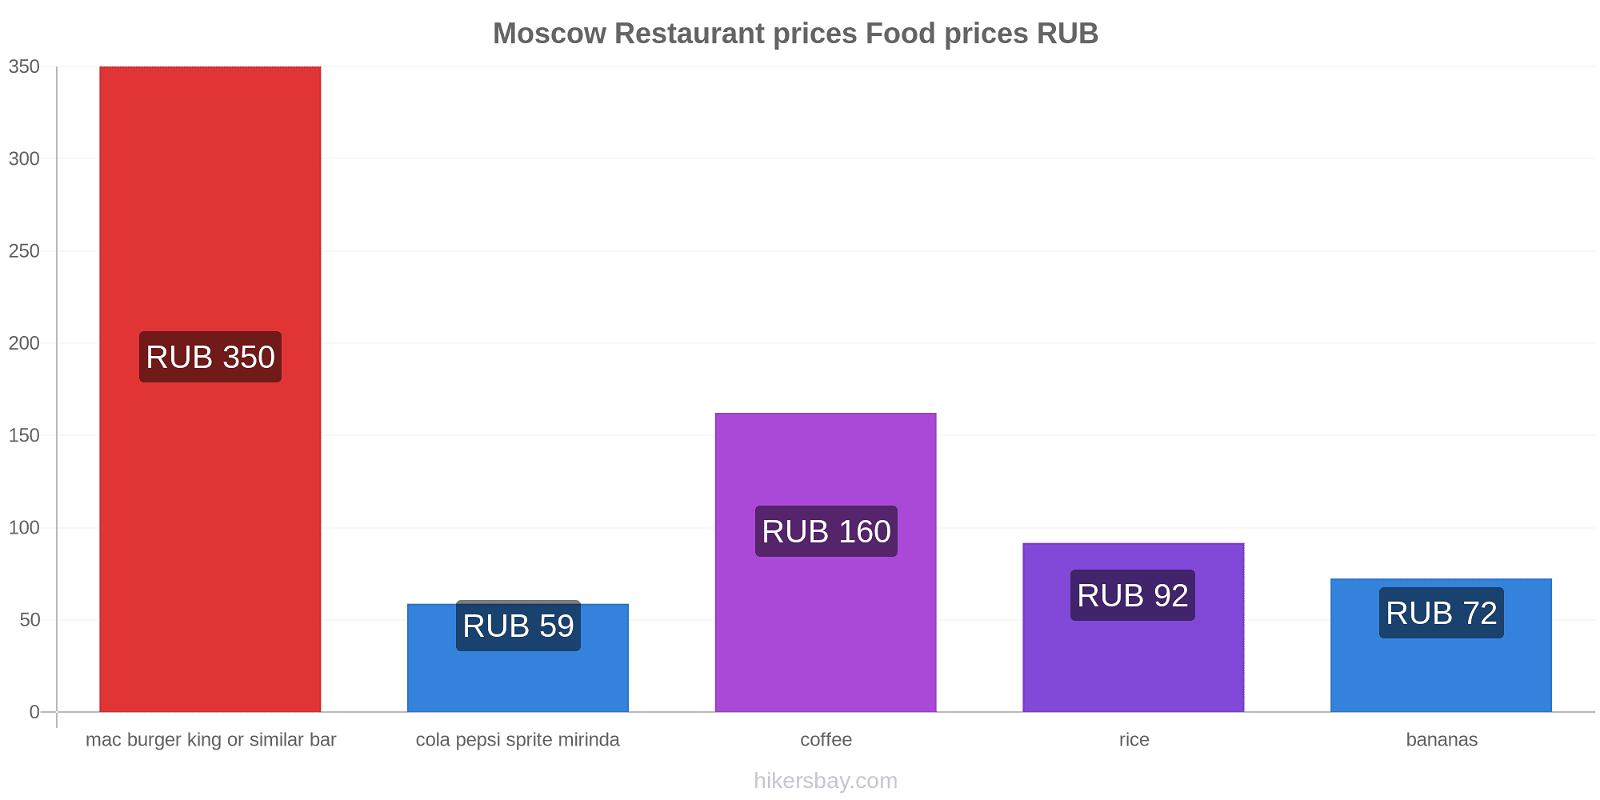 Moscow price changes hikersbay.com